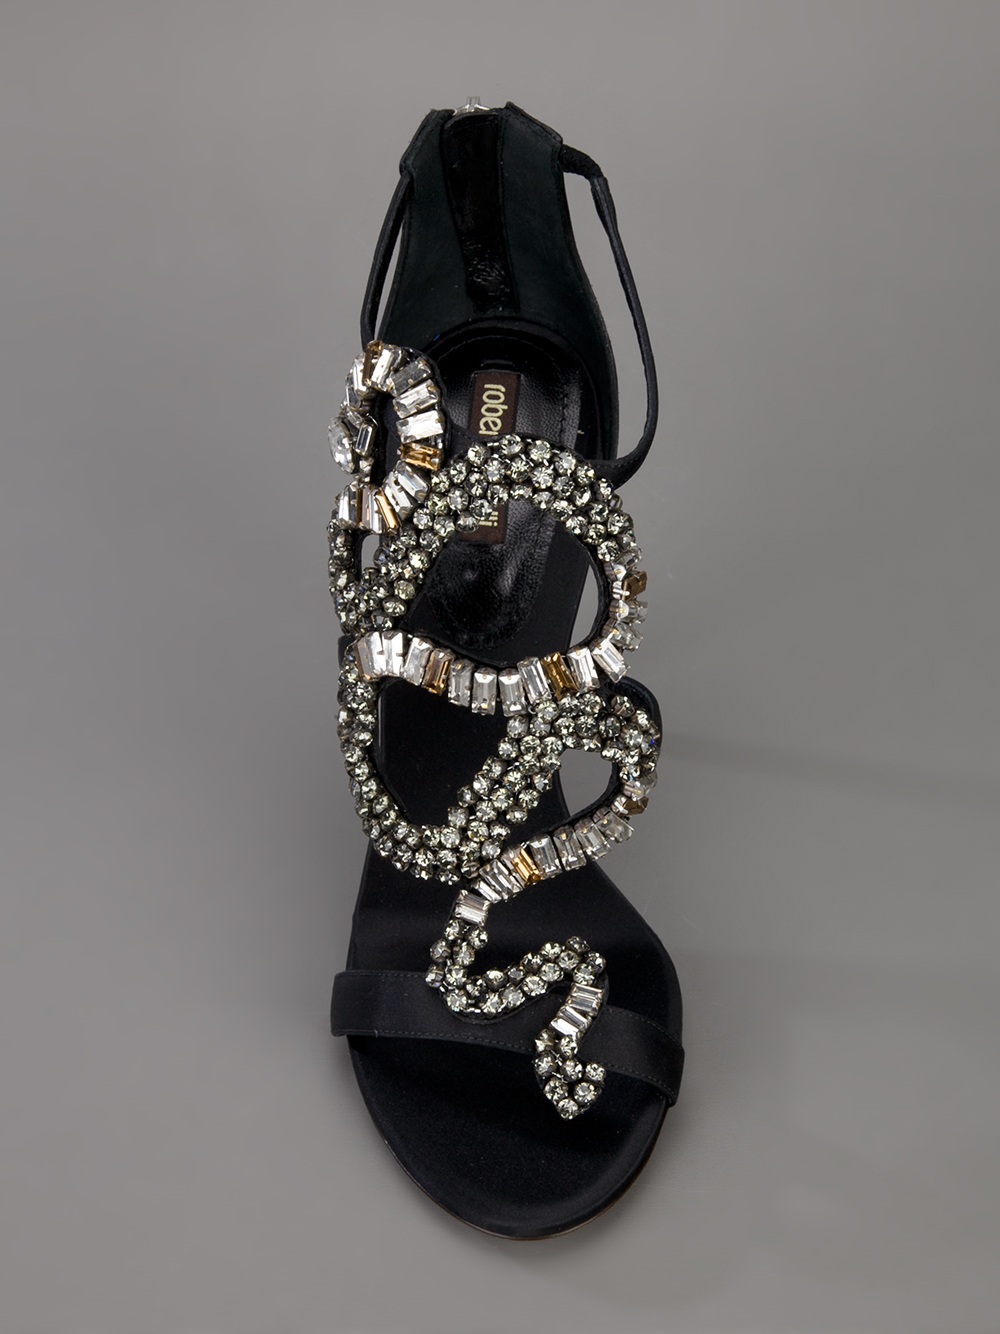 Roberto Cavalli Jewelled Snake Sandal in Black (Metallic) - Lyst